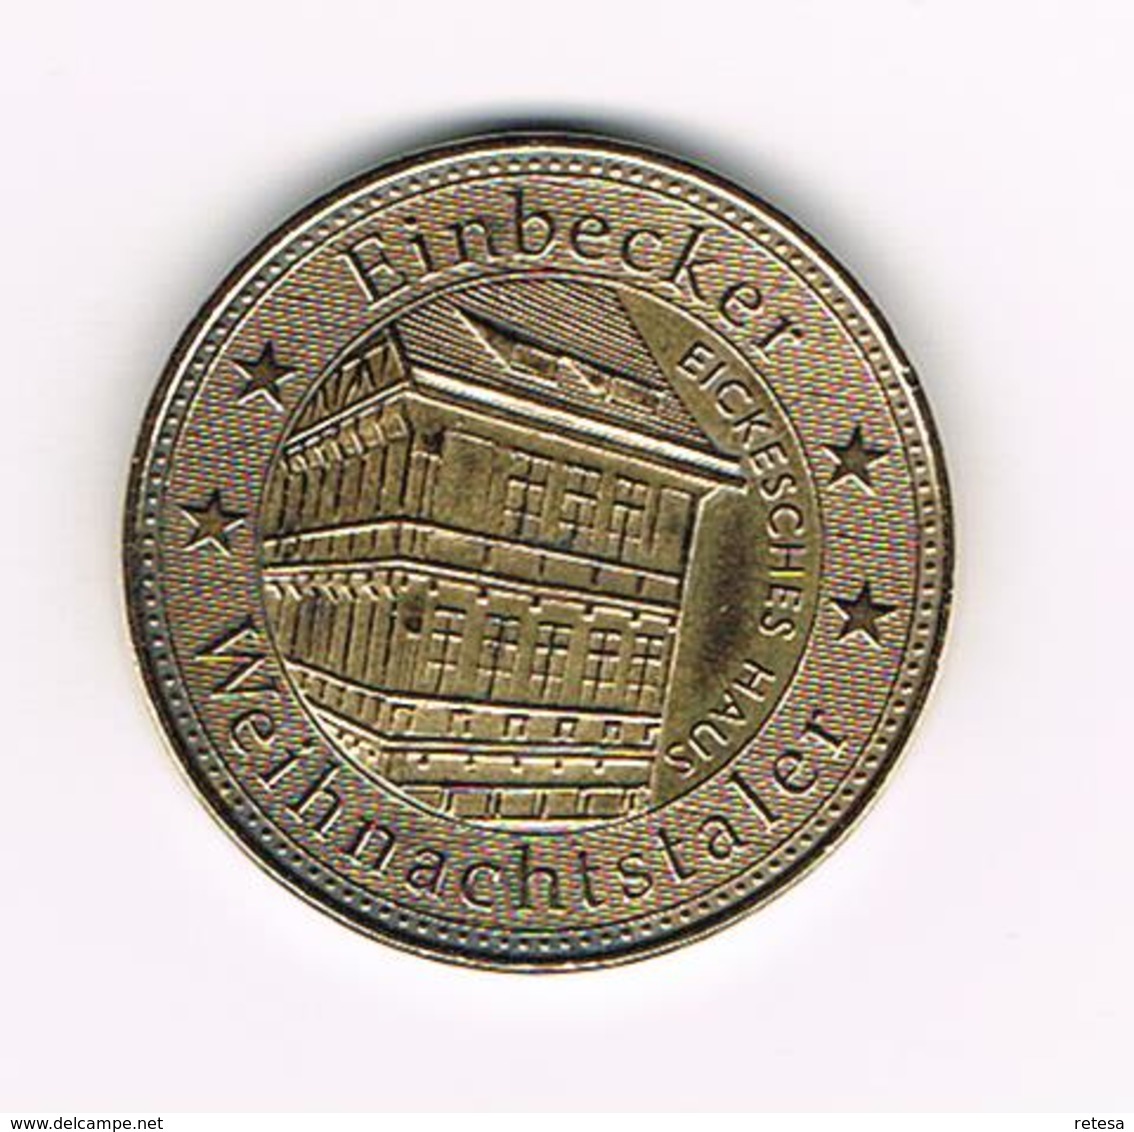 &  PENNING  EINBECKER  WEIHNACHTSTALER  EICKESCHES HAUS 2004 - Pièces écrasées (Elongated Coins)